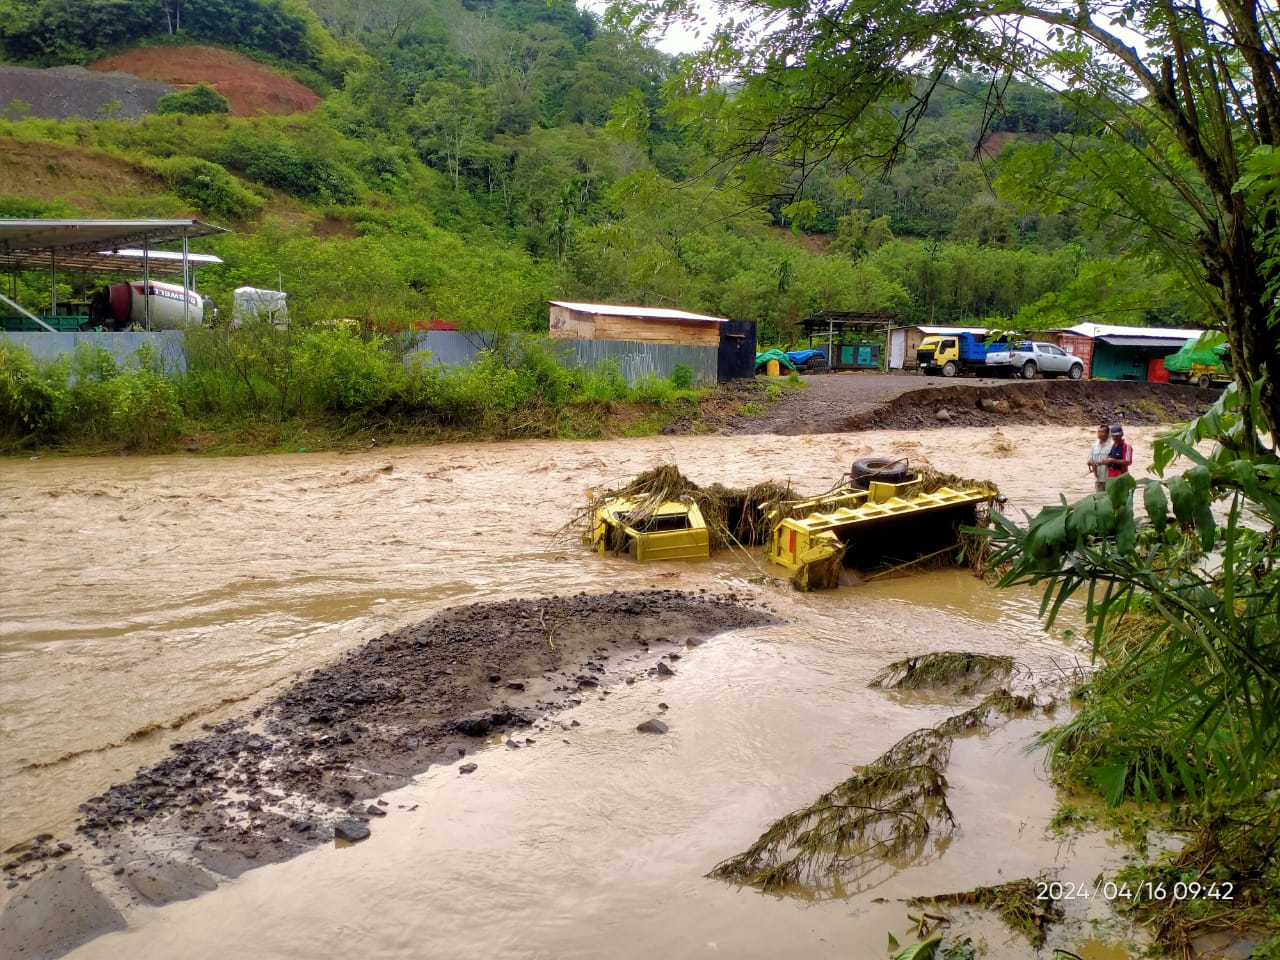 Rumah, Sawah, Hewan Ternak Termasuk  2 Dump Truck Ikut Terhanyut Terjangan Sungai Ketahun Lebong